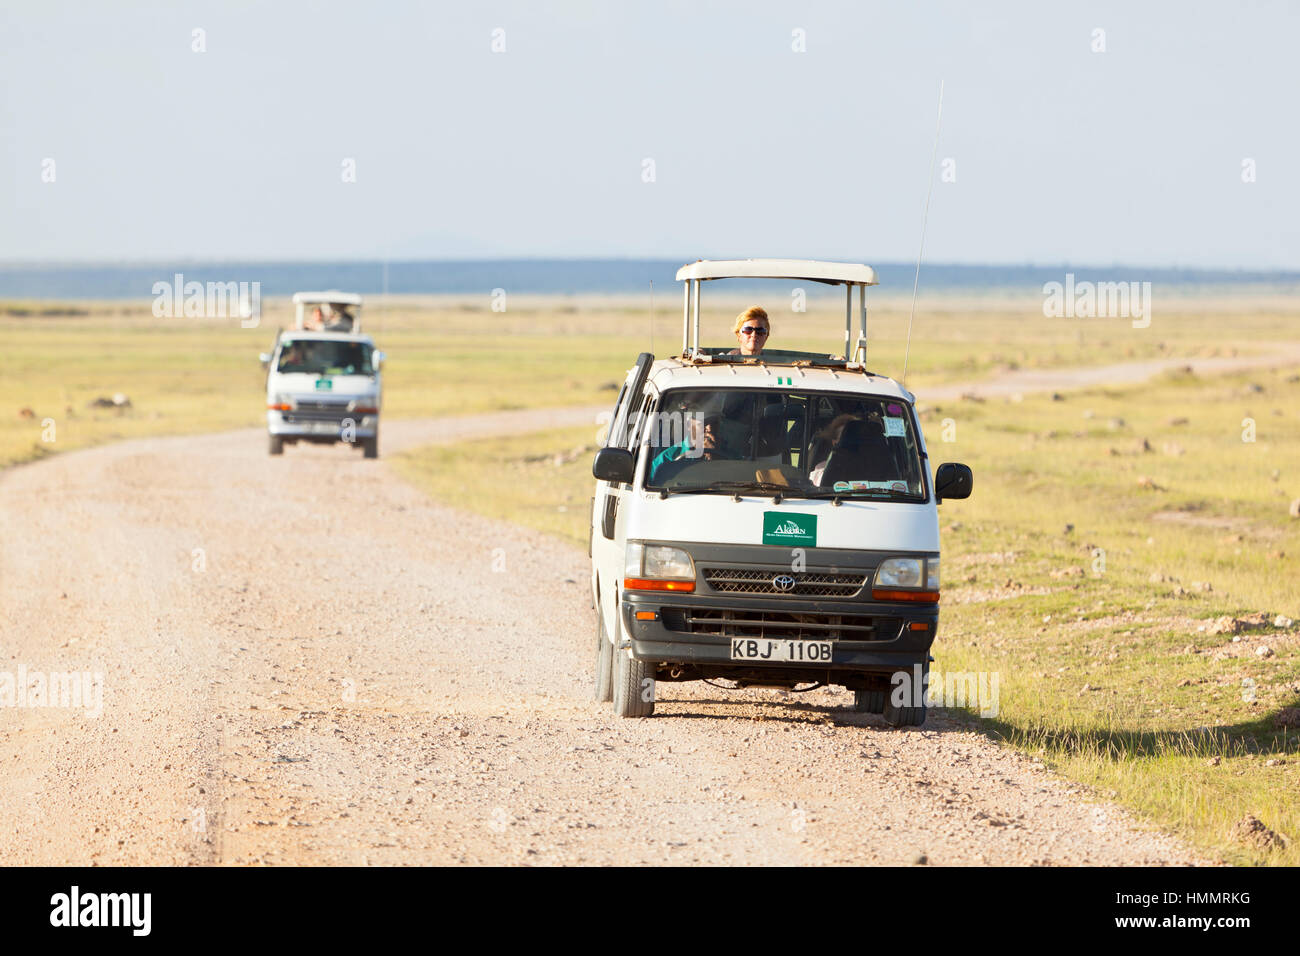 Amboseli, Kenya - February 4: Safari Cars with tourists in Amboseli National Park in Kenya on February 4, 2013 Stock Photo